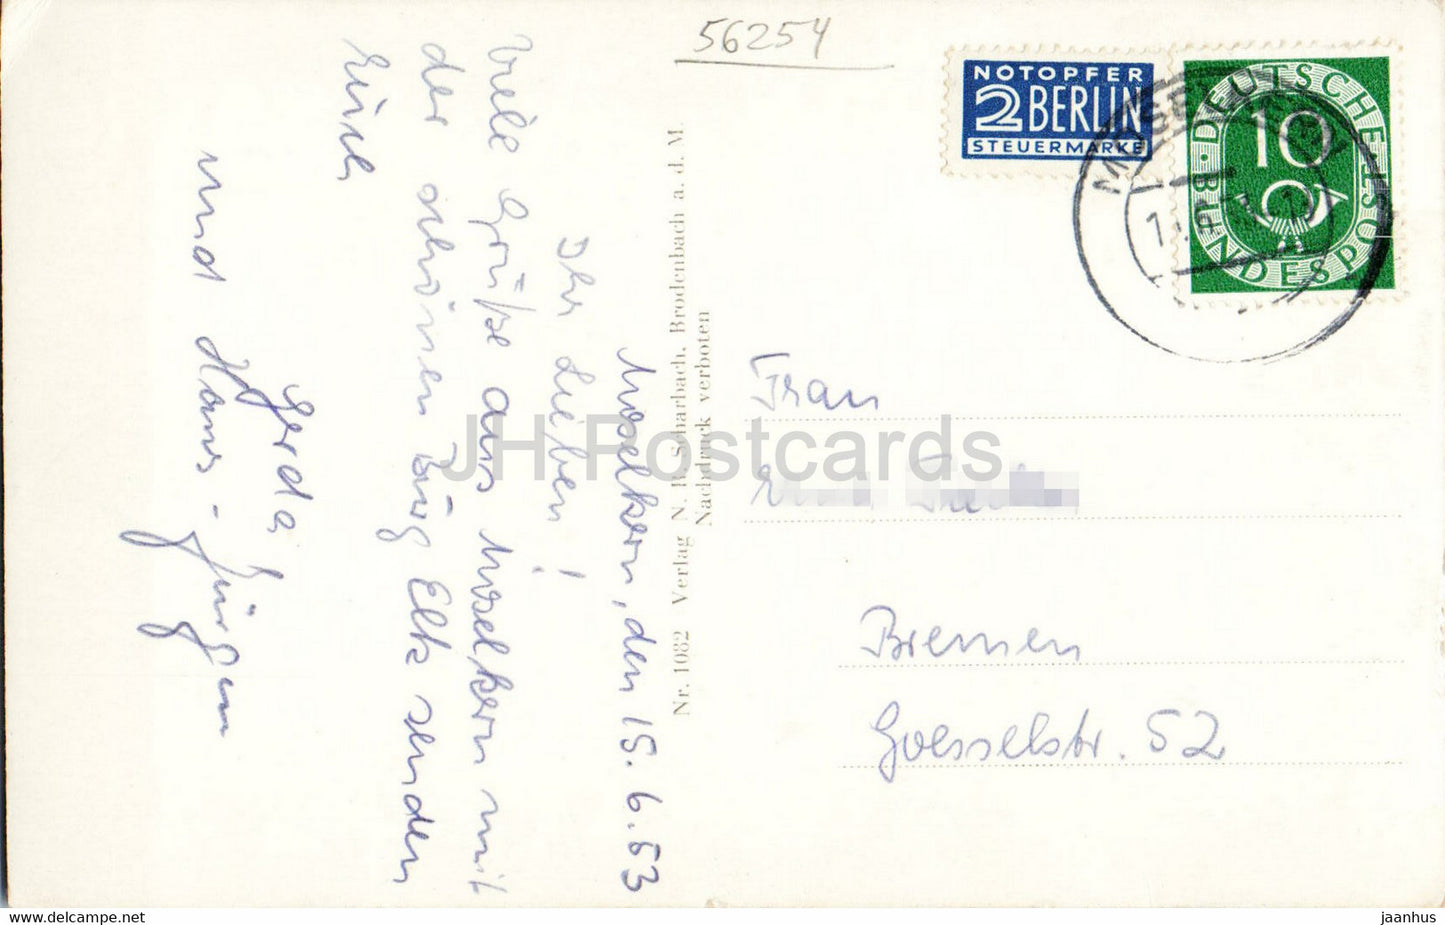 Burg Eltz - castle - 1082 - old postcard - 1953 - Germany - used